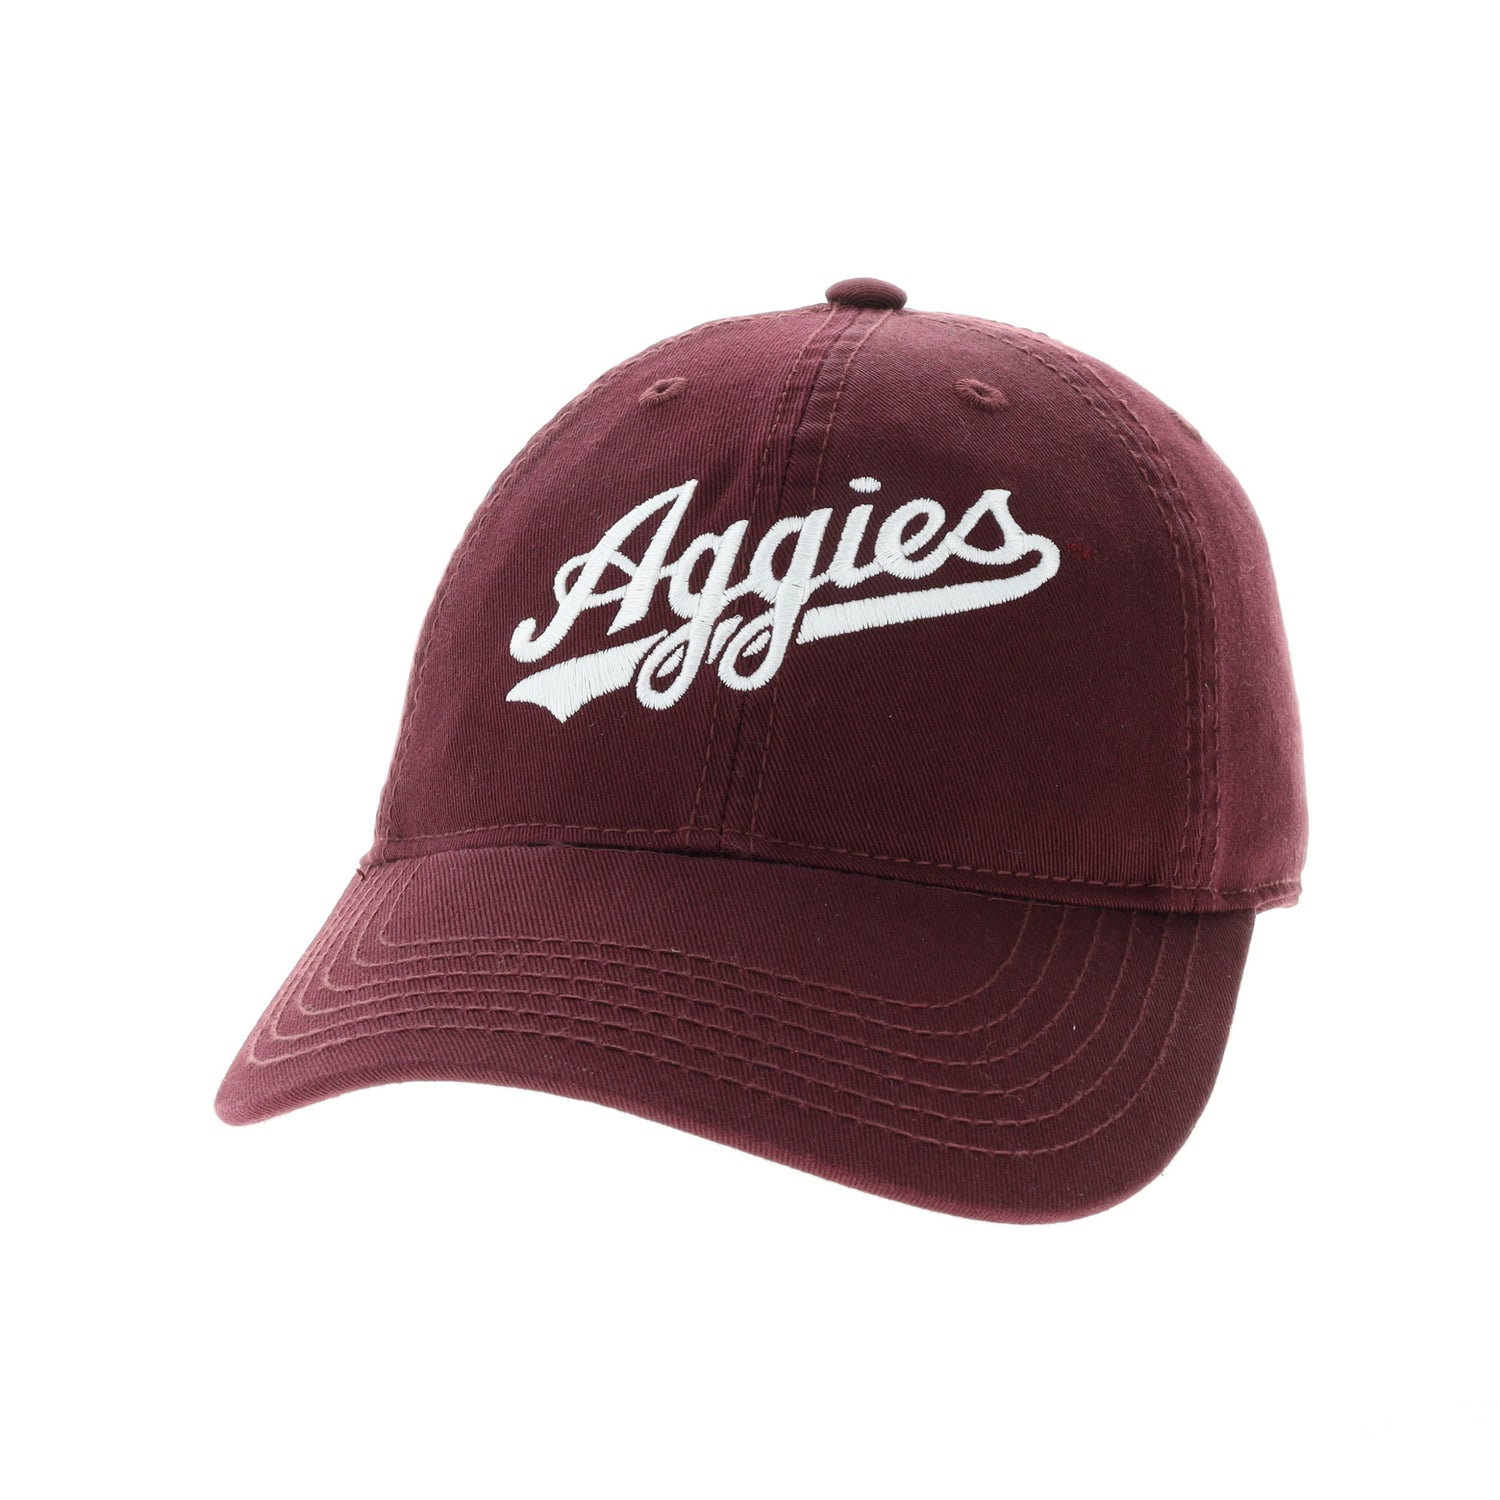 Aggies Legacy 717 Youth Baseball Hat